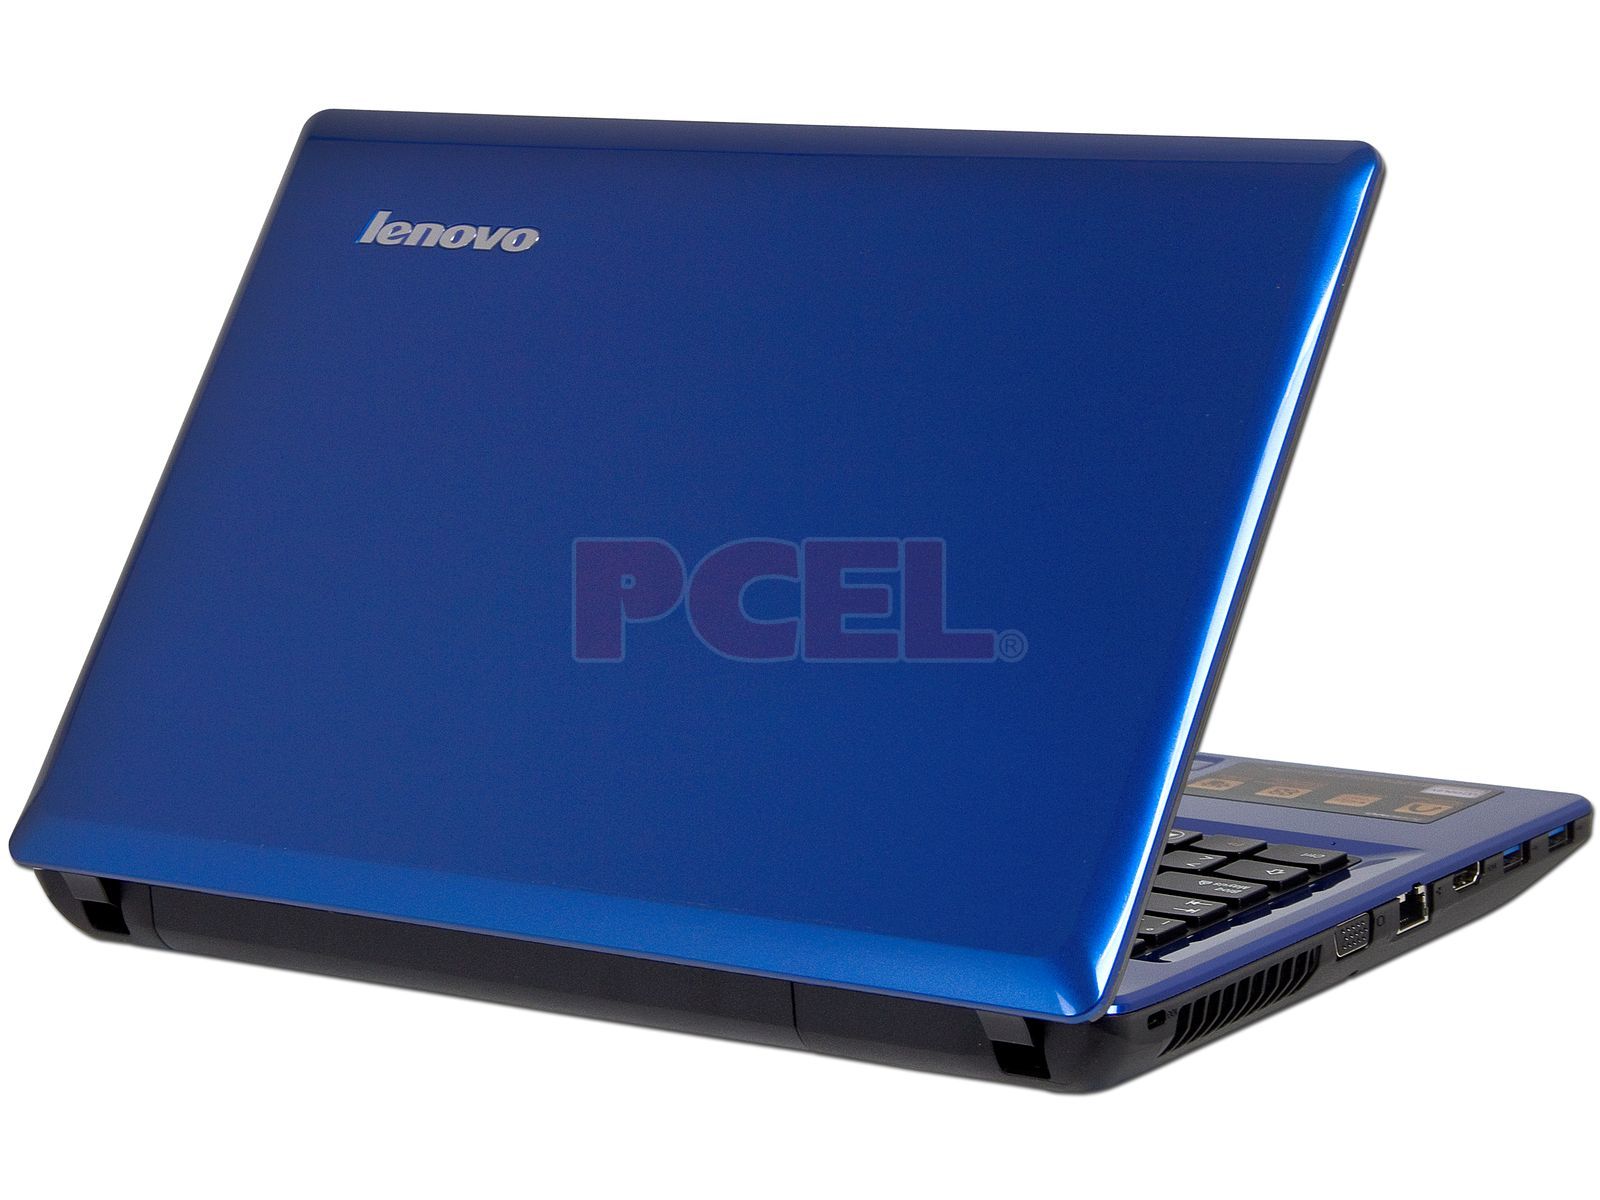 Laptop Lenovo G480: Procesador Intel Celeron B830 (), Memoria de 2 GB  DDR3, Disco Duro de 500 GB, Pantalla LED HD de 14